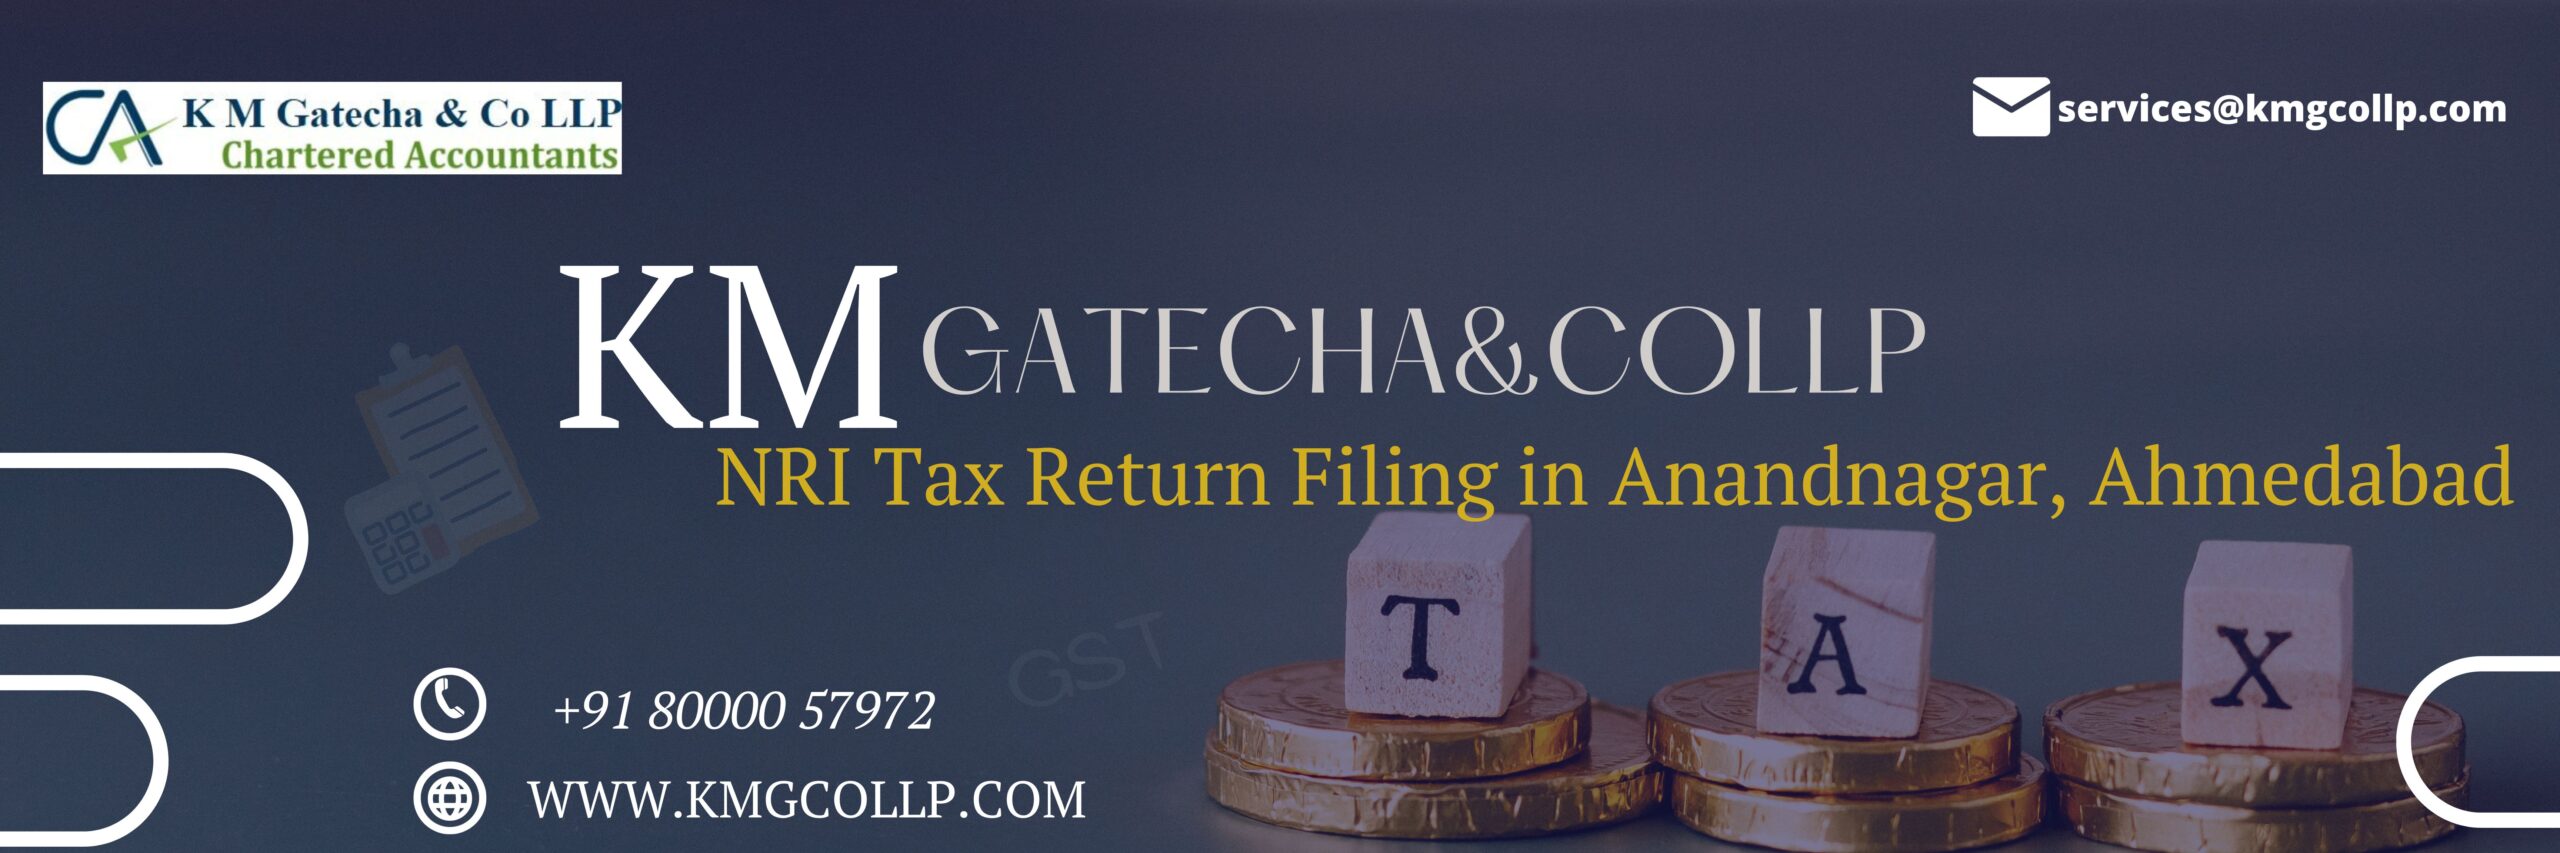 NRI Tax Return Filing in Anandnagar